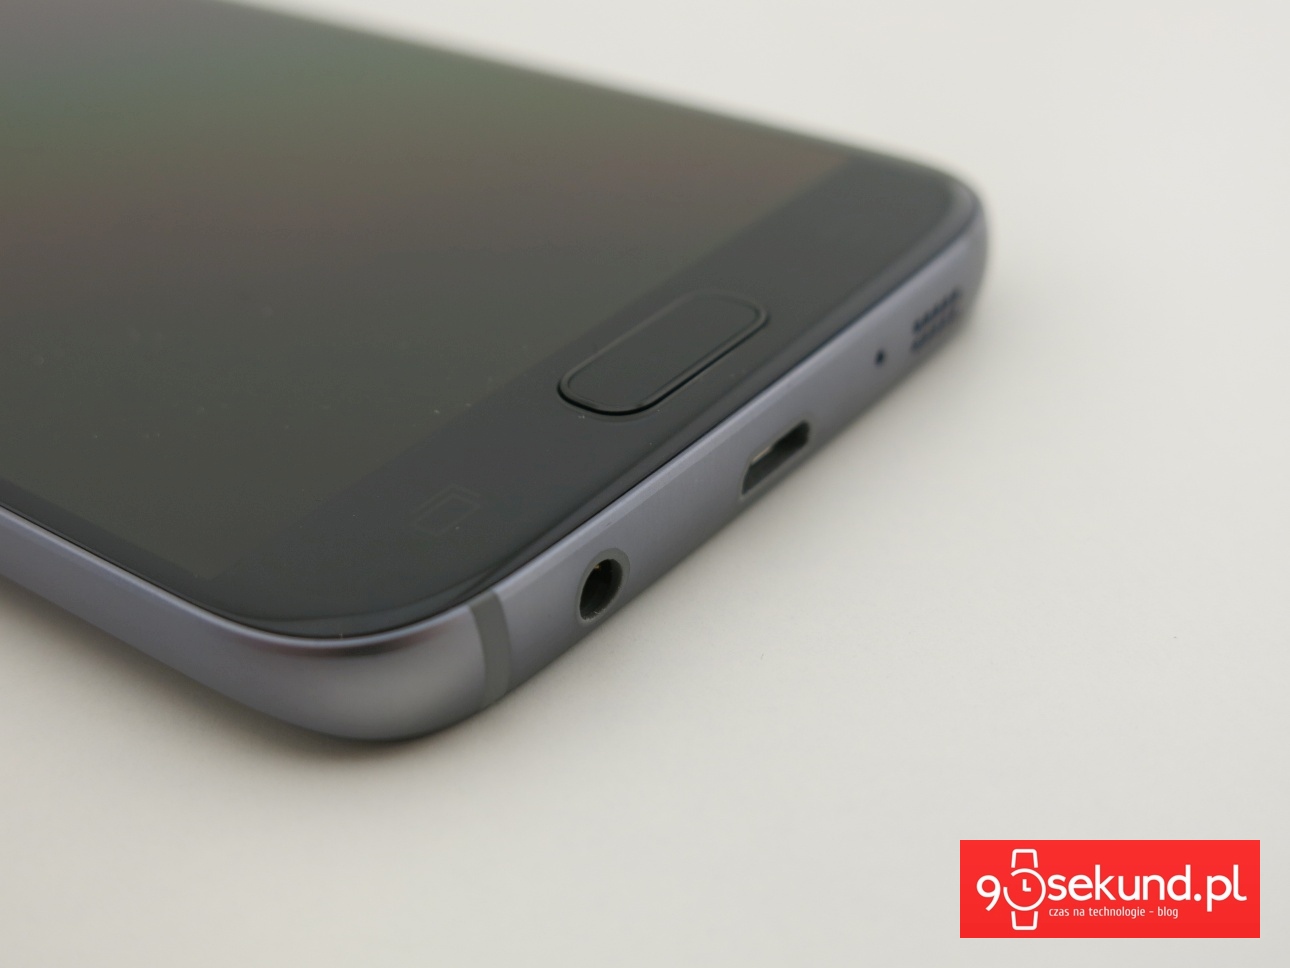 Samsung Galaxy S7 SM-G930 - recenzja 90sekund.pl